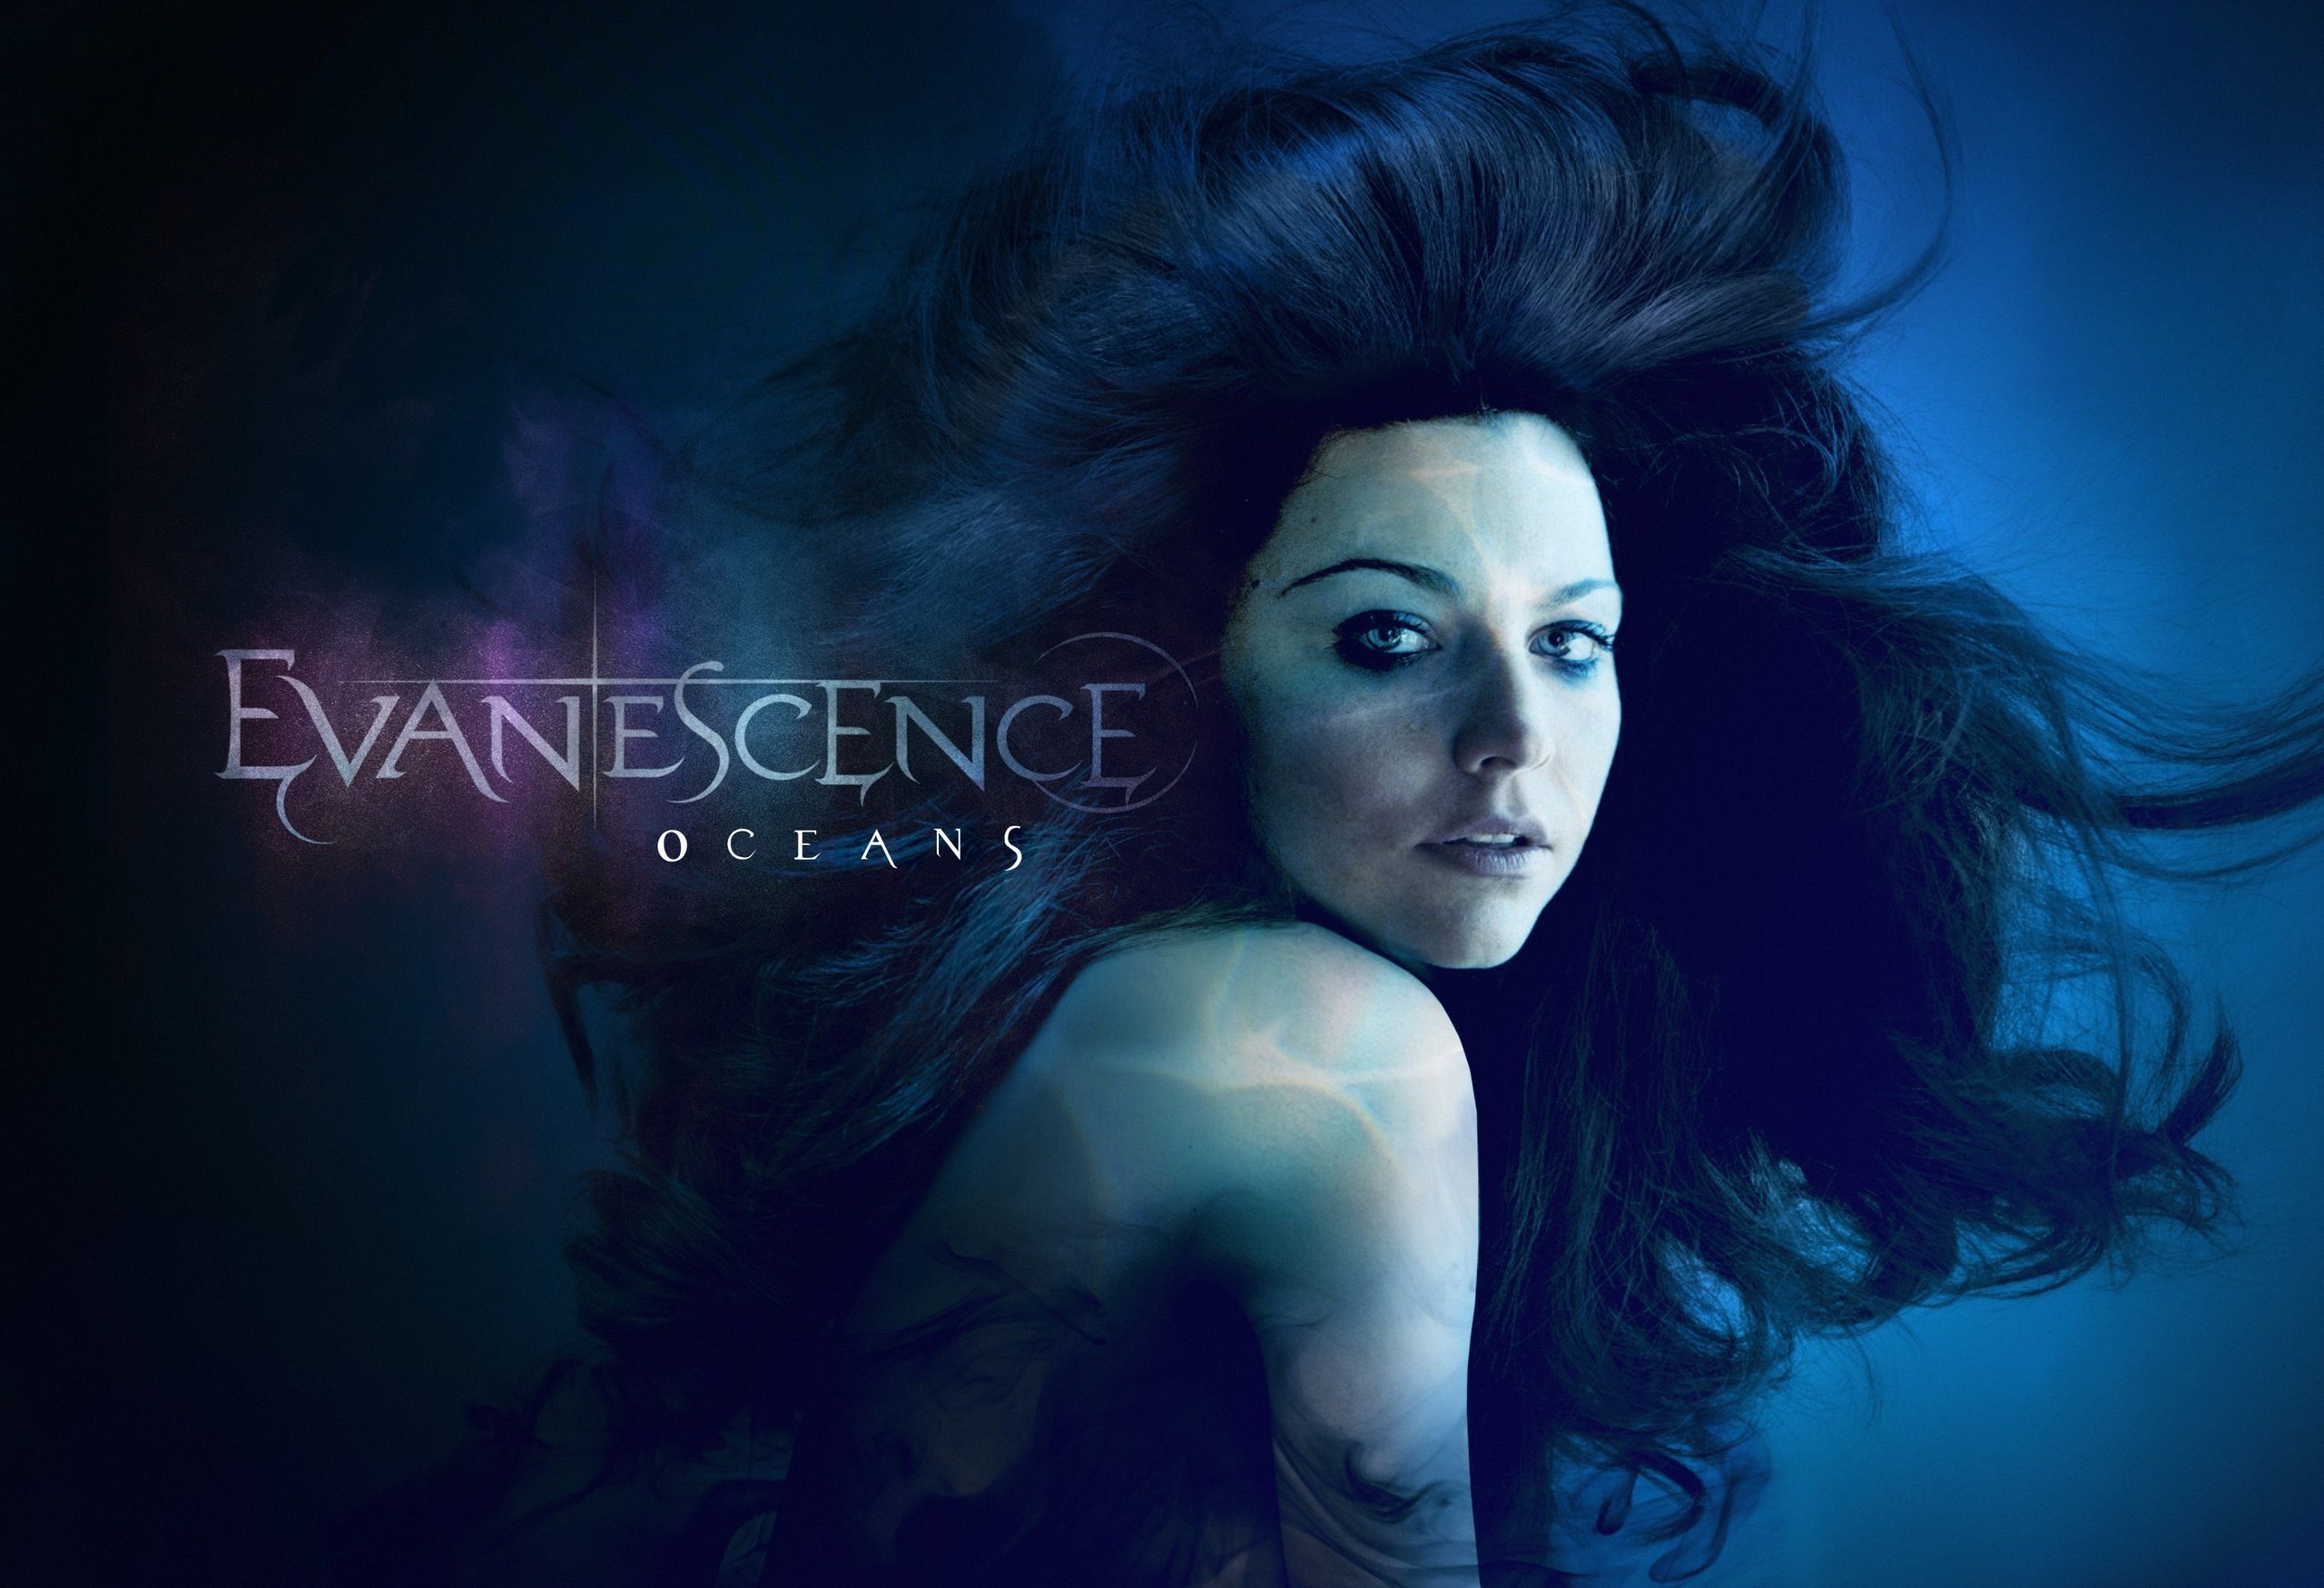 Amy Lee Evanescence Wallpaper Singer Musician